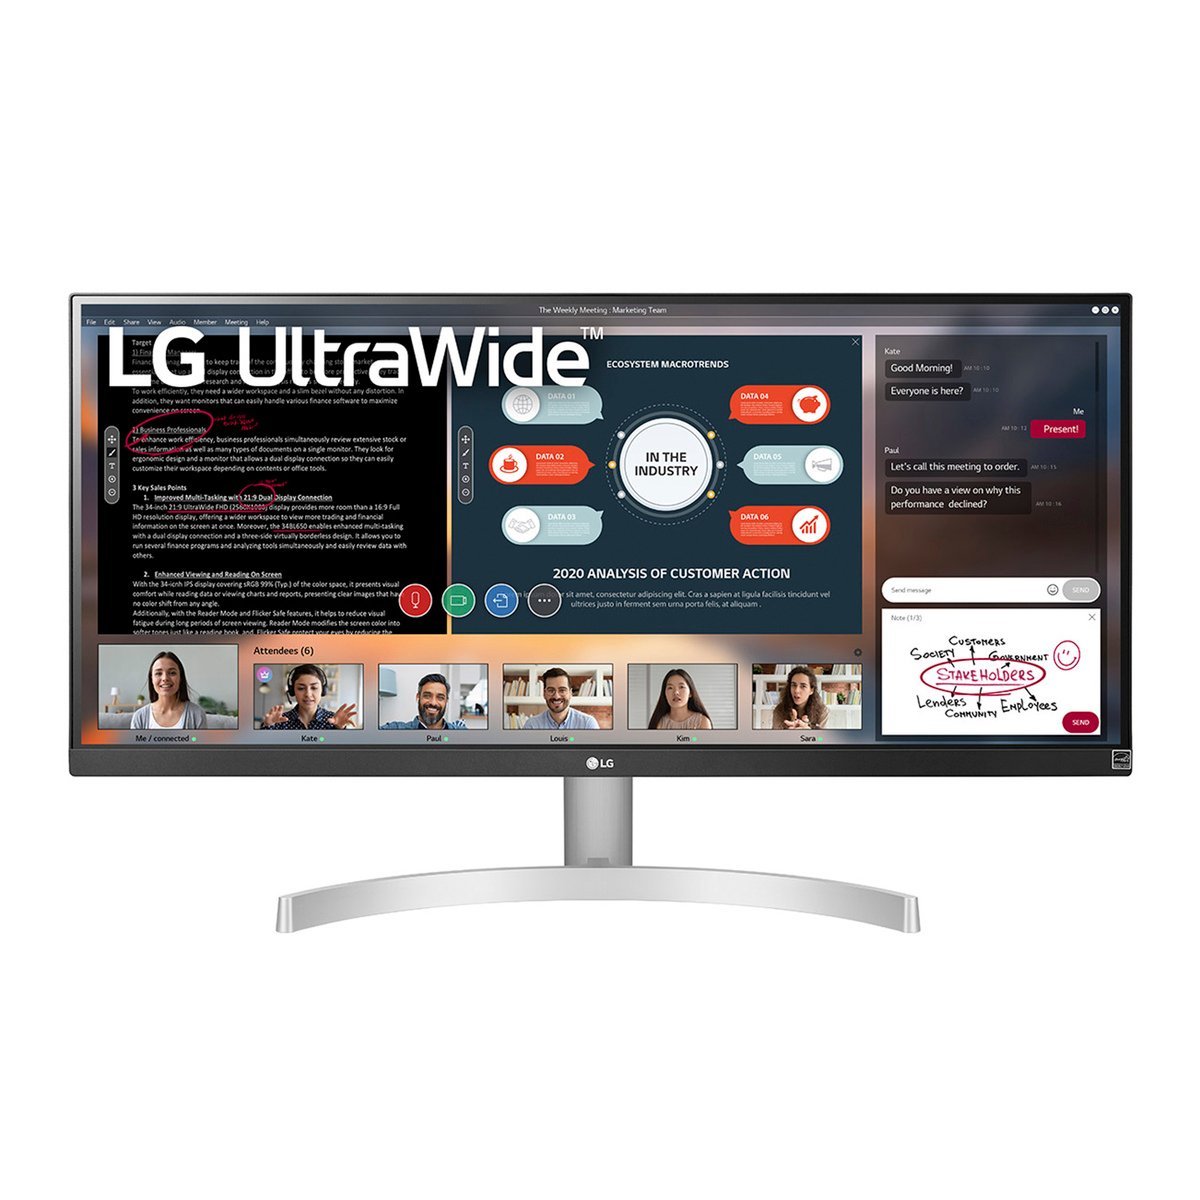 LG 29UM59-P 29 inch UltraWide LED Monitor